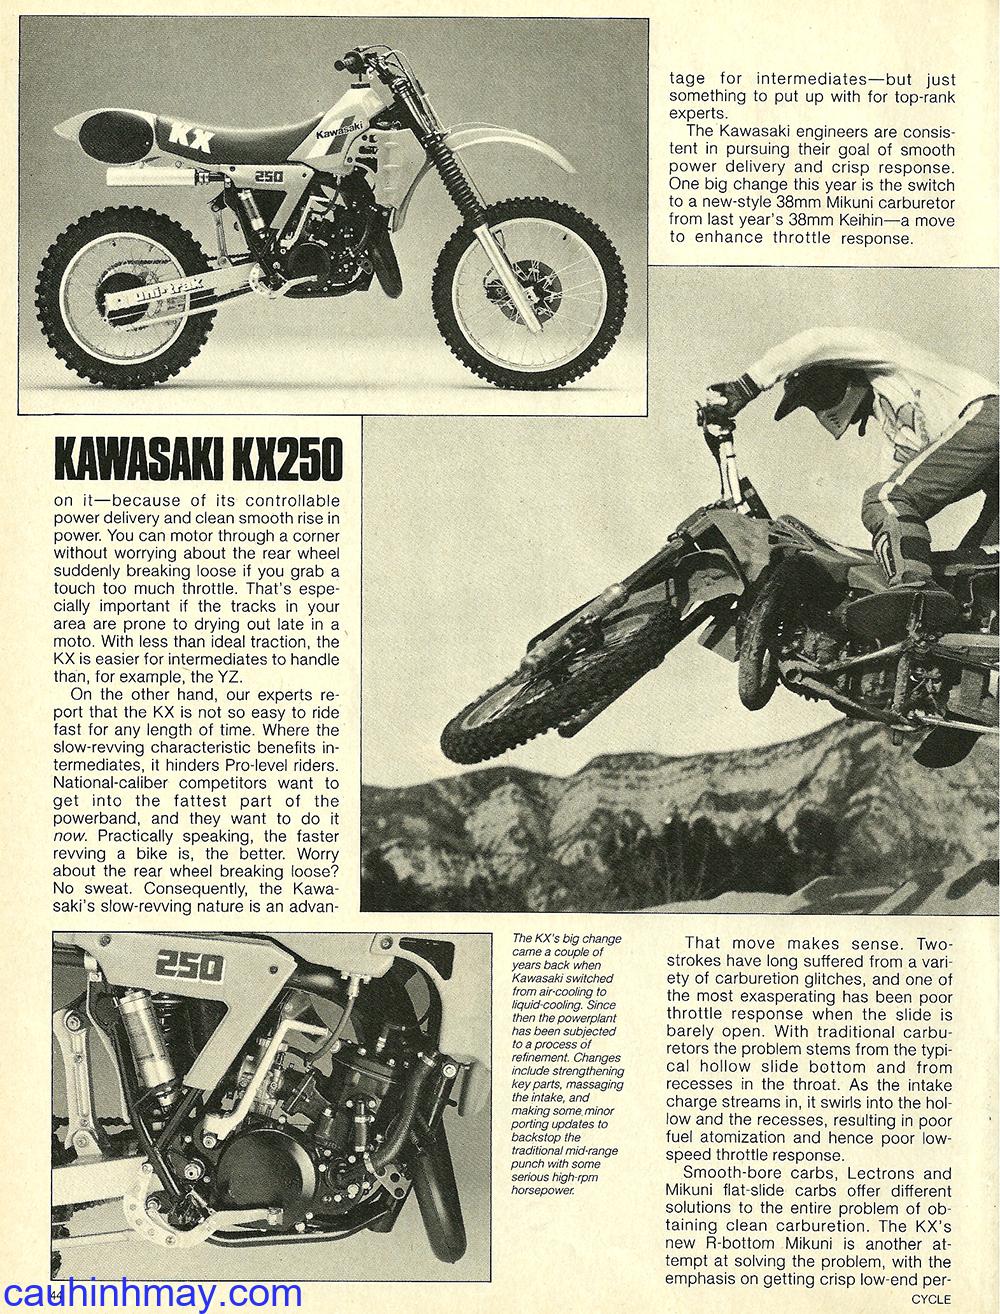 1984 KAWASAKI KX 250 - cauhinhmay.com